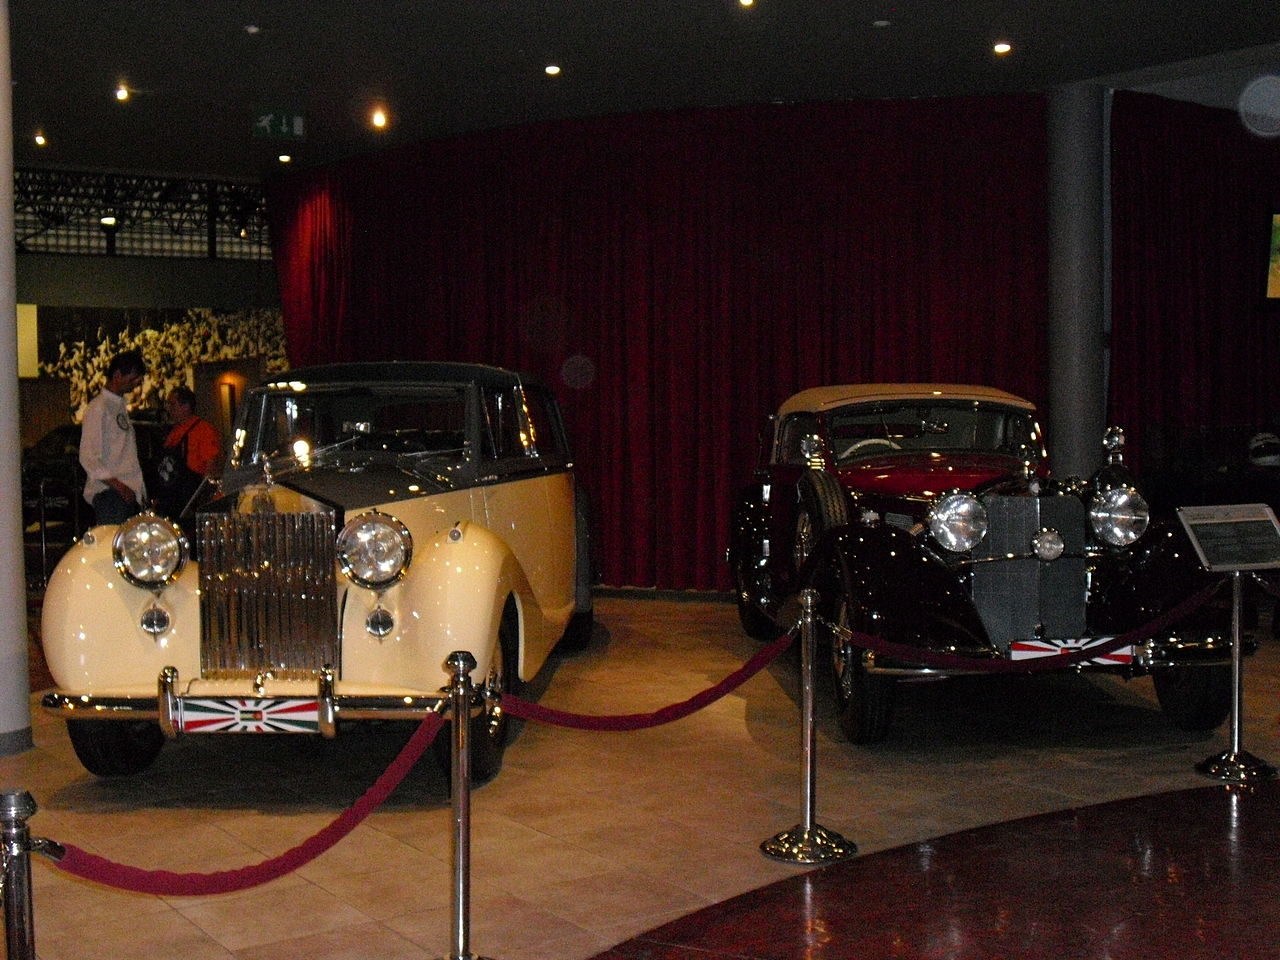  The Royal Automobile Museum, Amman